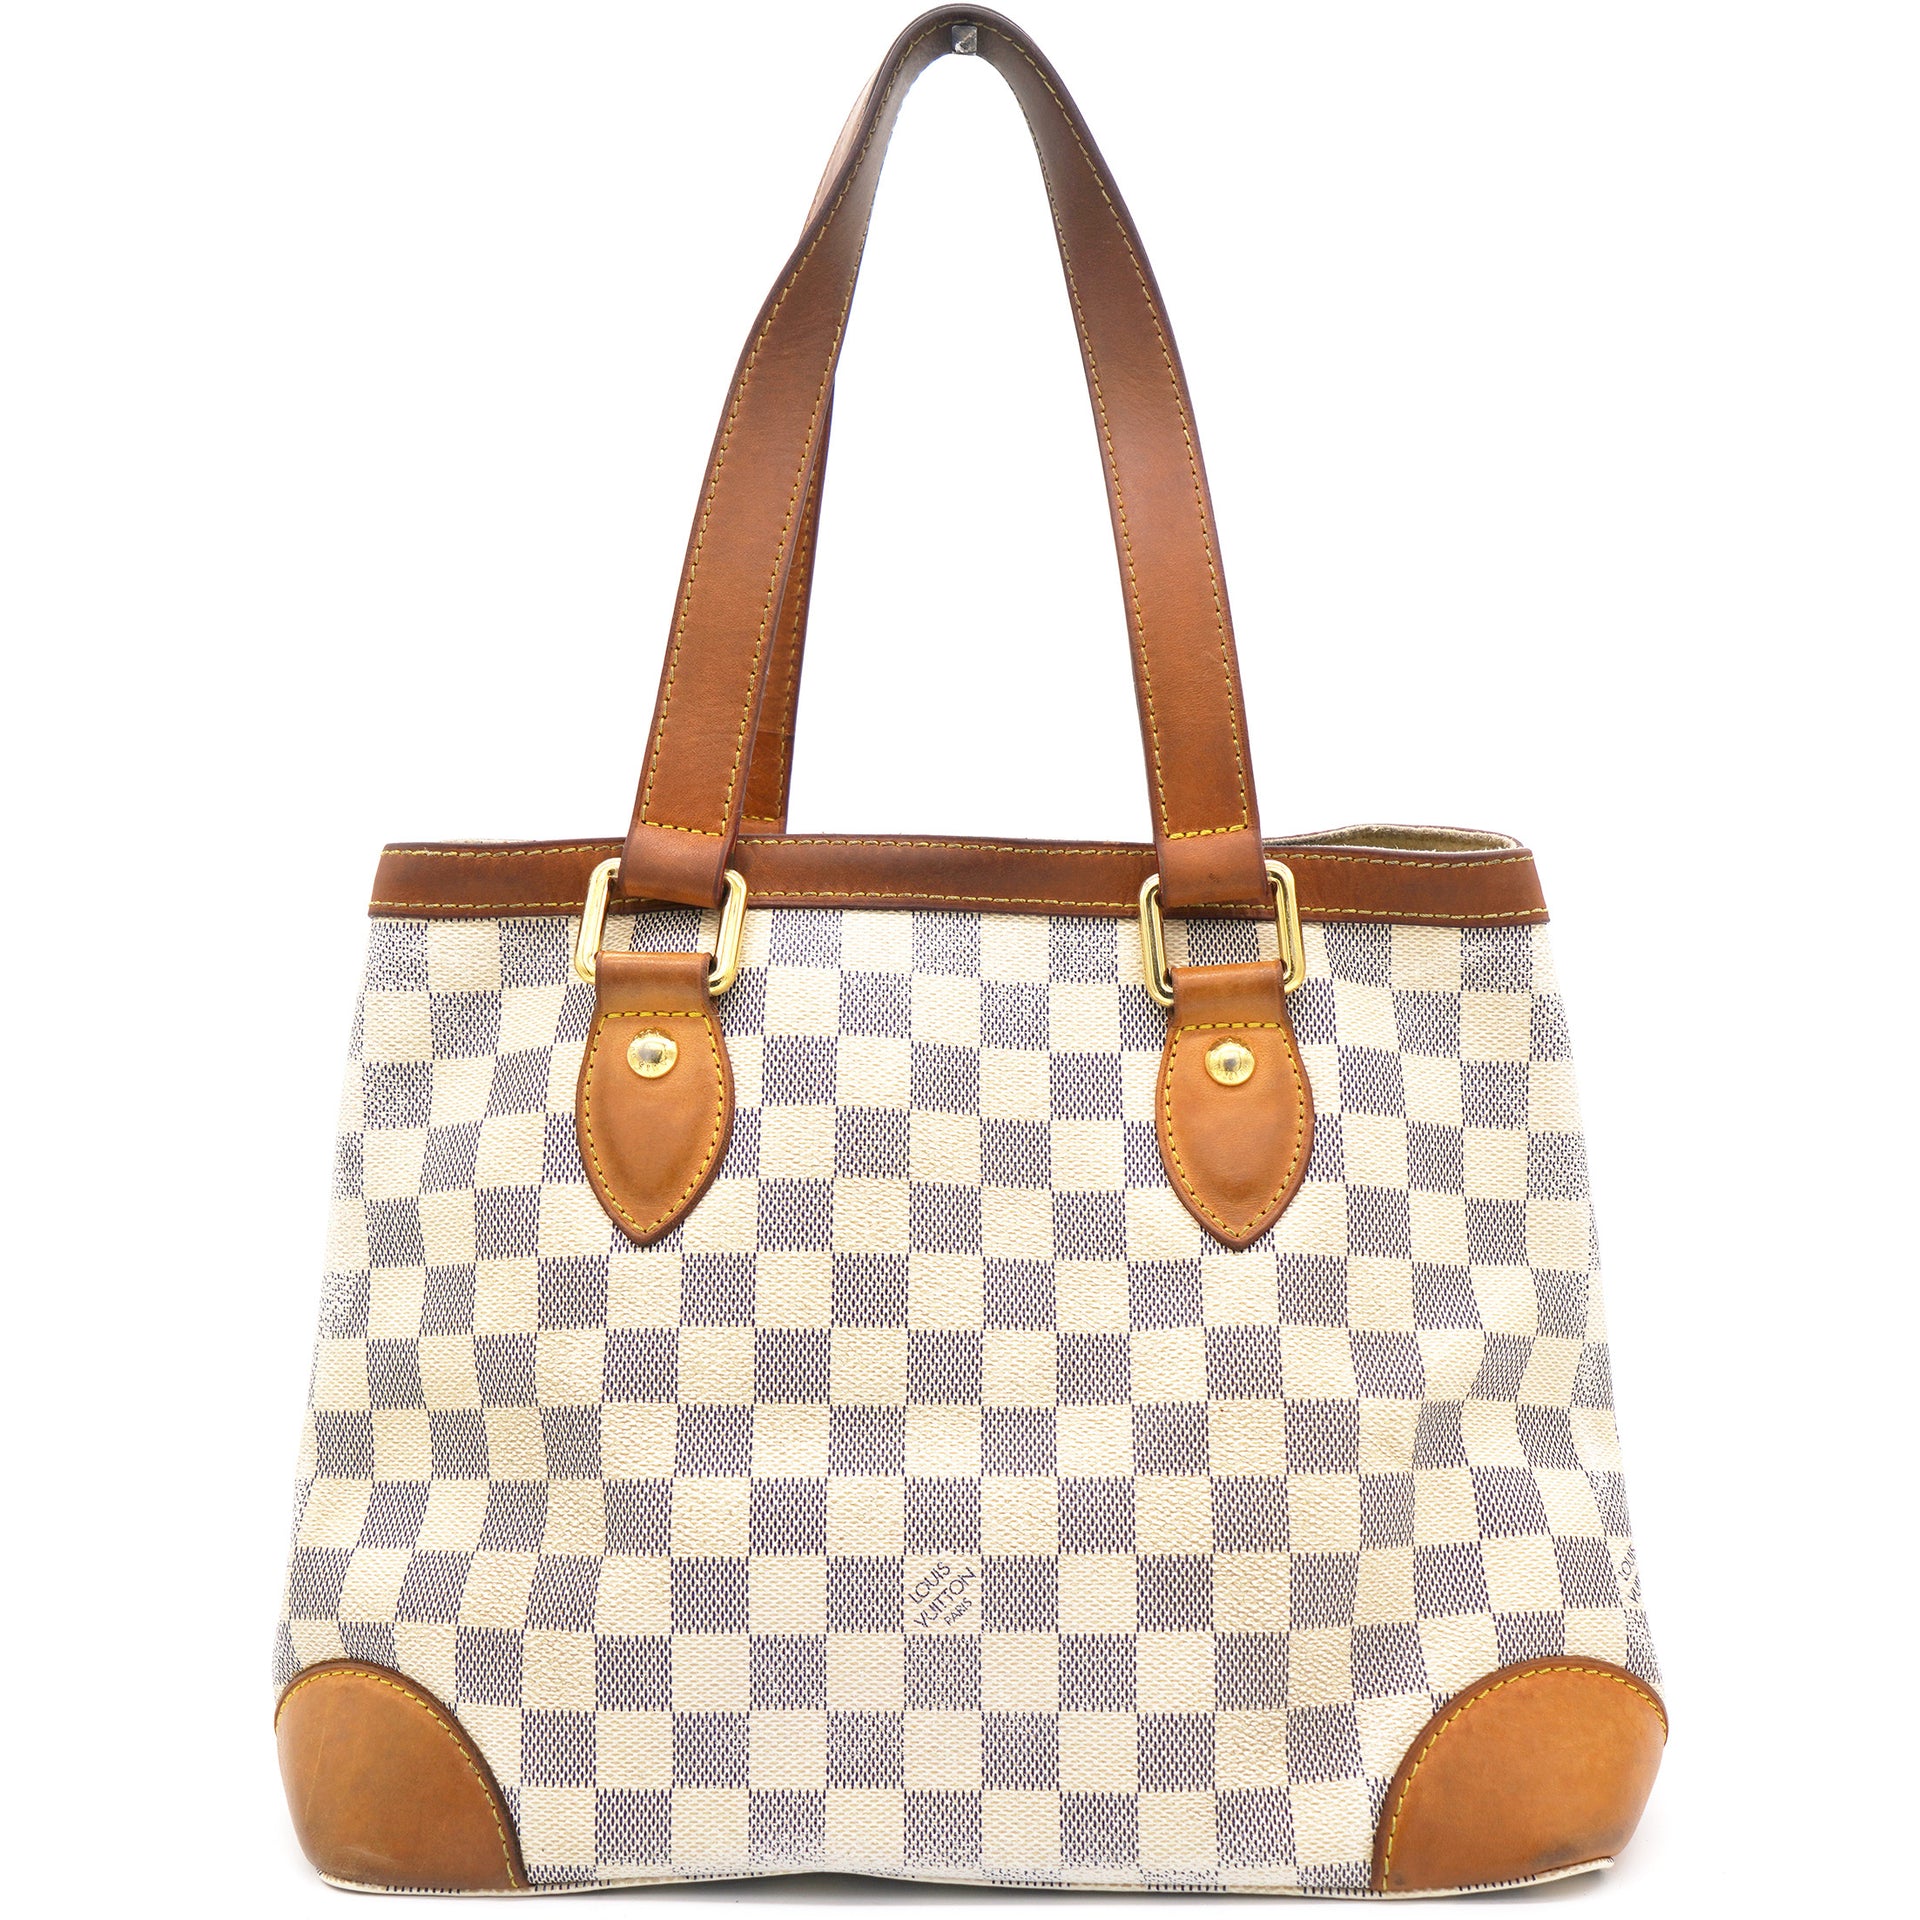 Louis Vuitton Checkered Bags  Handbags for Women  Authenticity Guaranteed   eBay